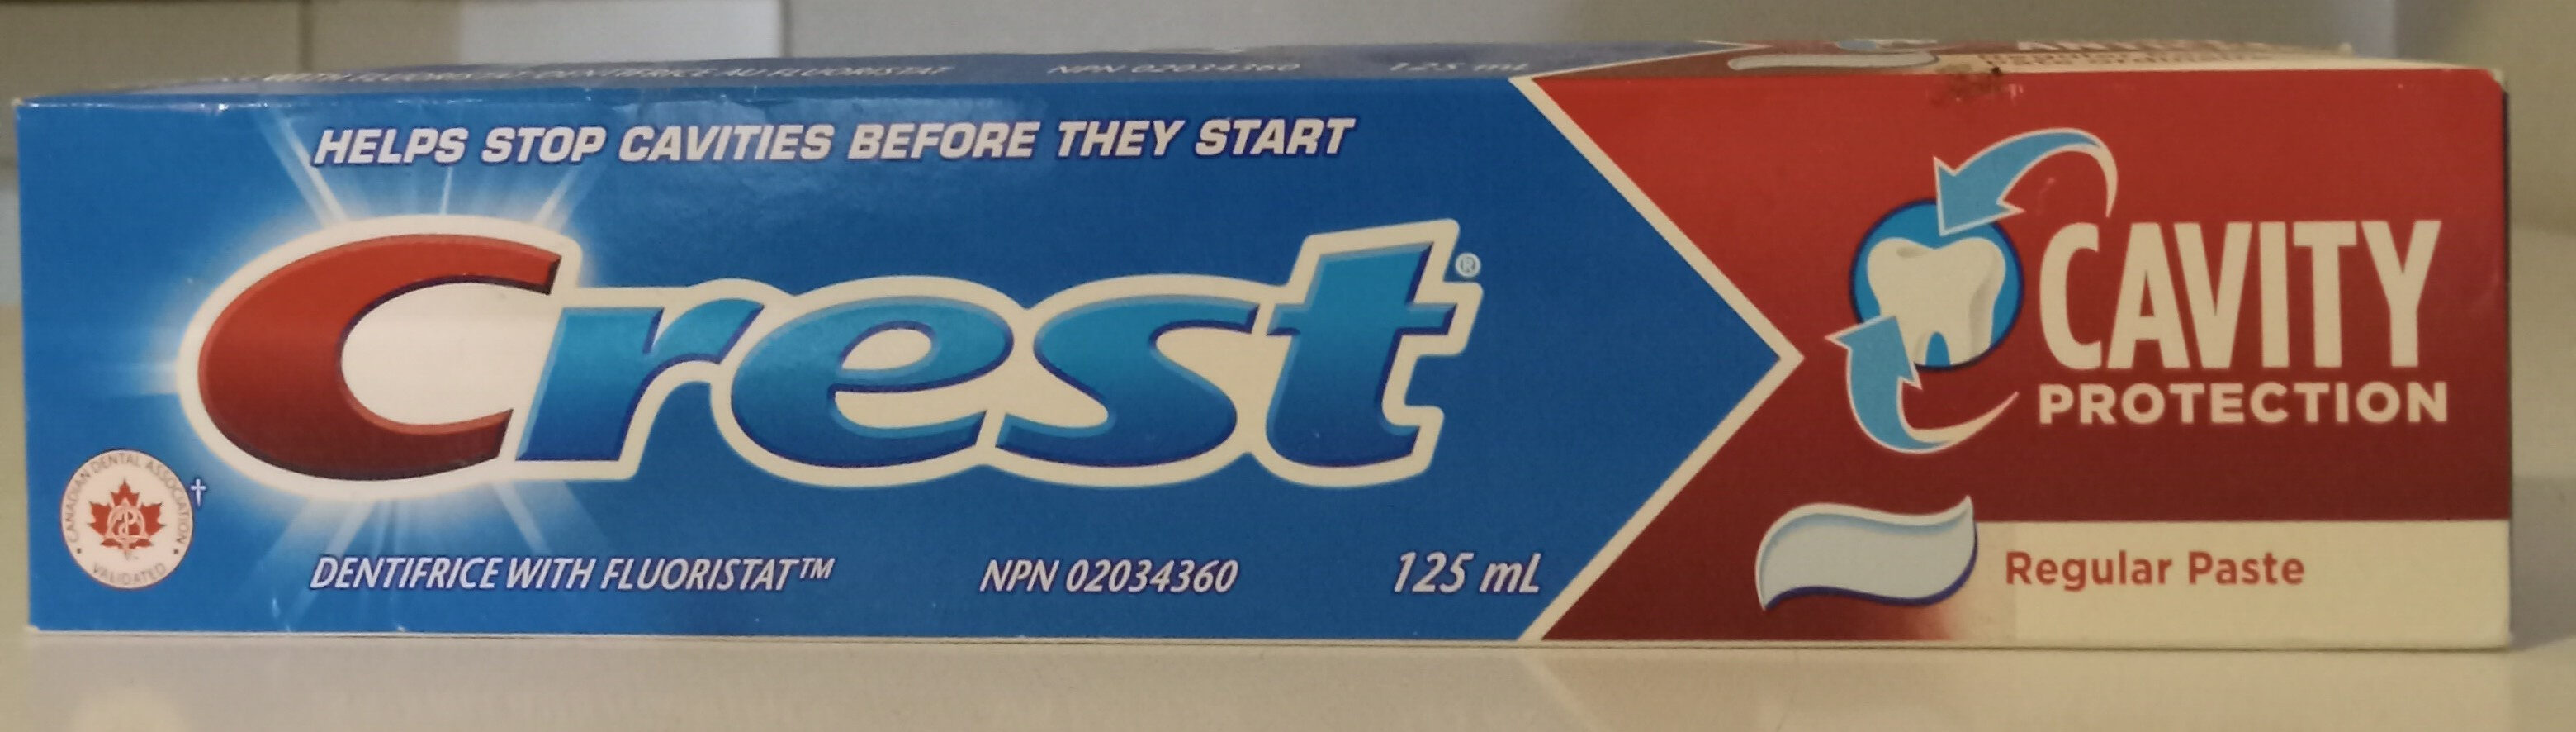 Regular Paste Cavity Protection Dentifrice with Flouristat - 製品 - en